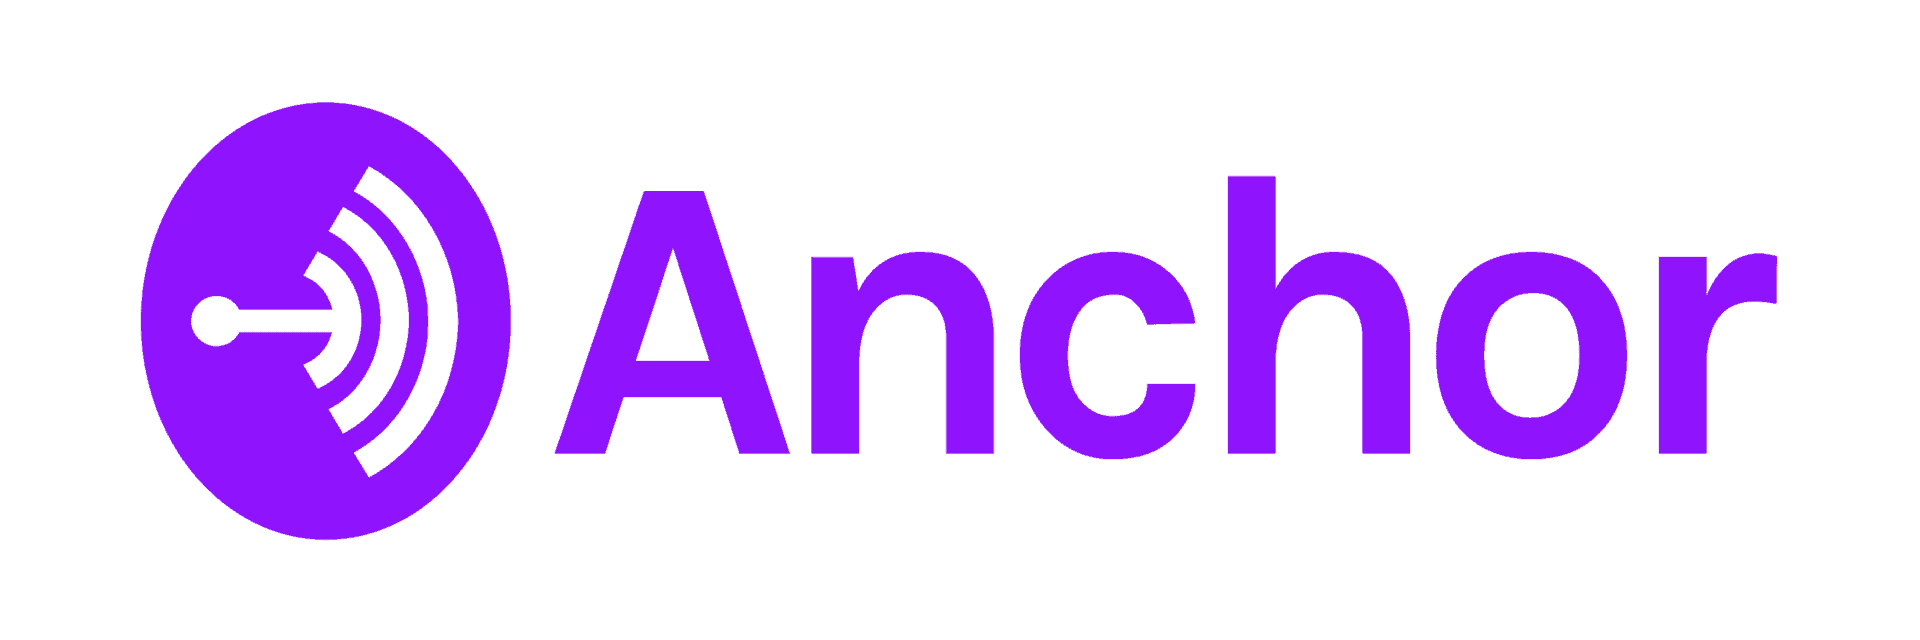 anchor logo - KbWorks - SharePoint & Teams Specialist